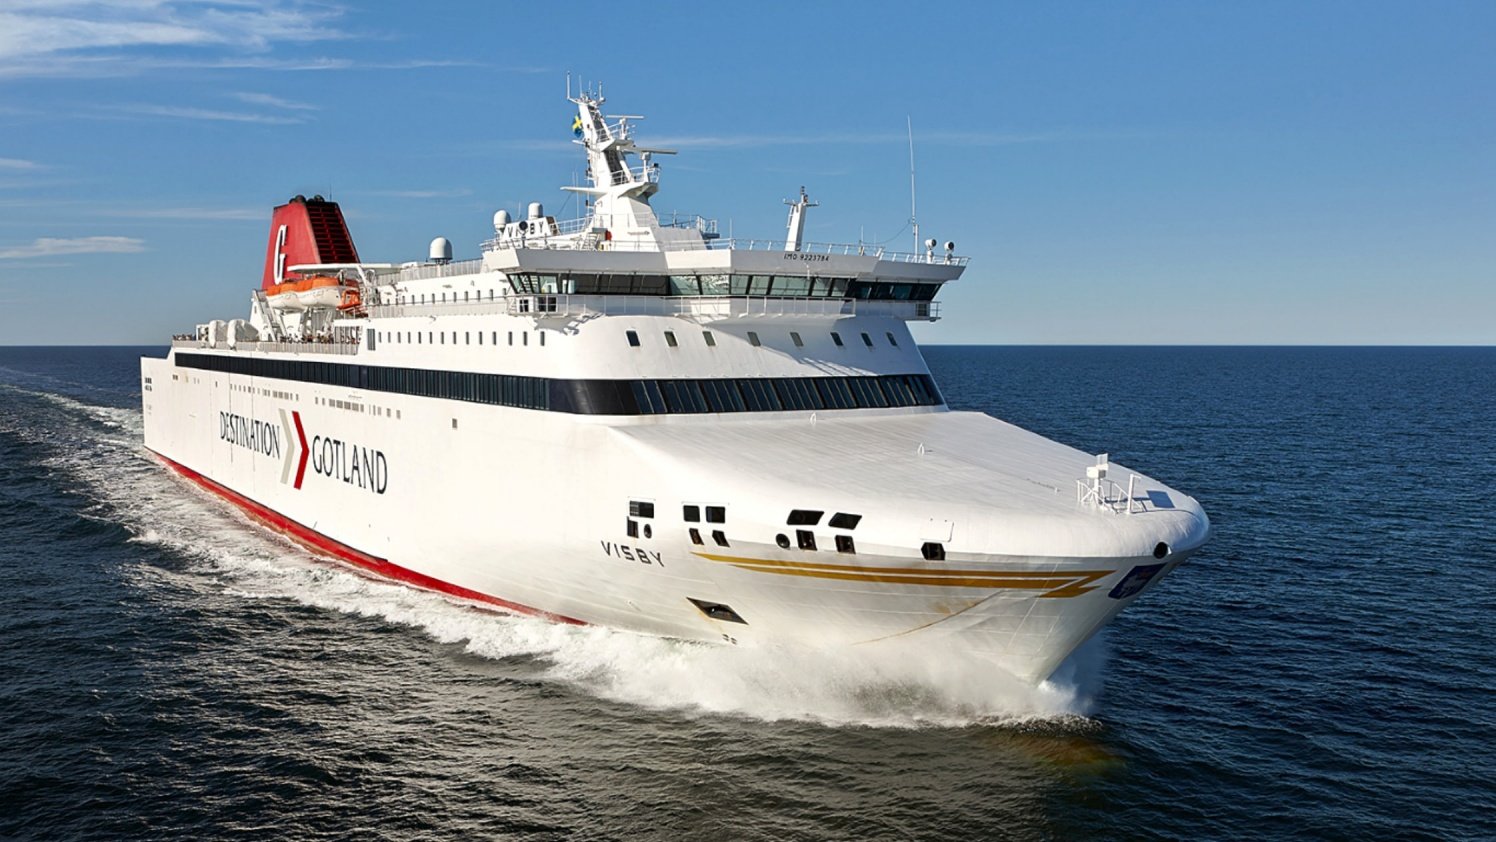 Visby - Stockholm connection Destination Gotland ferry Gallery | Tours